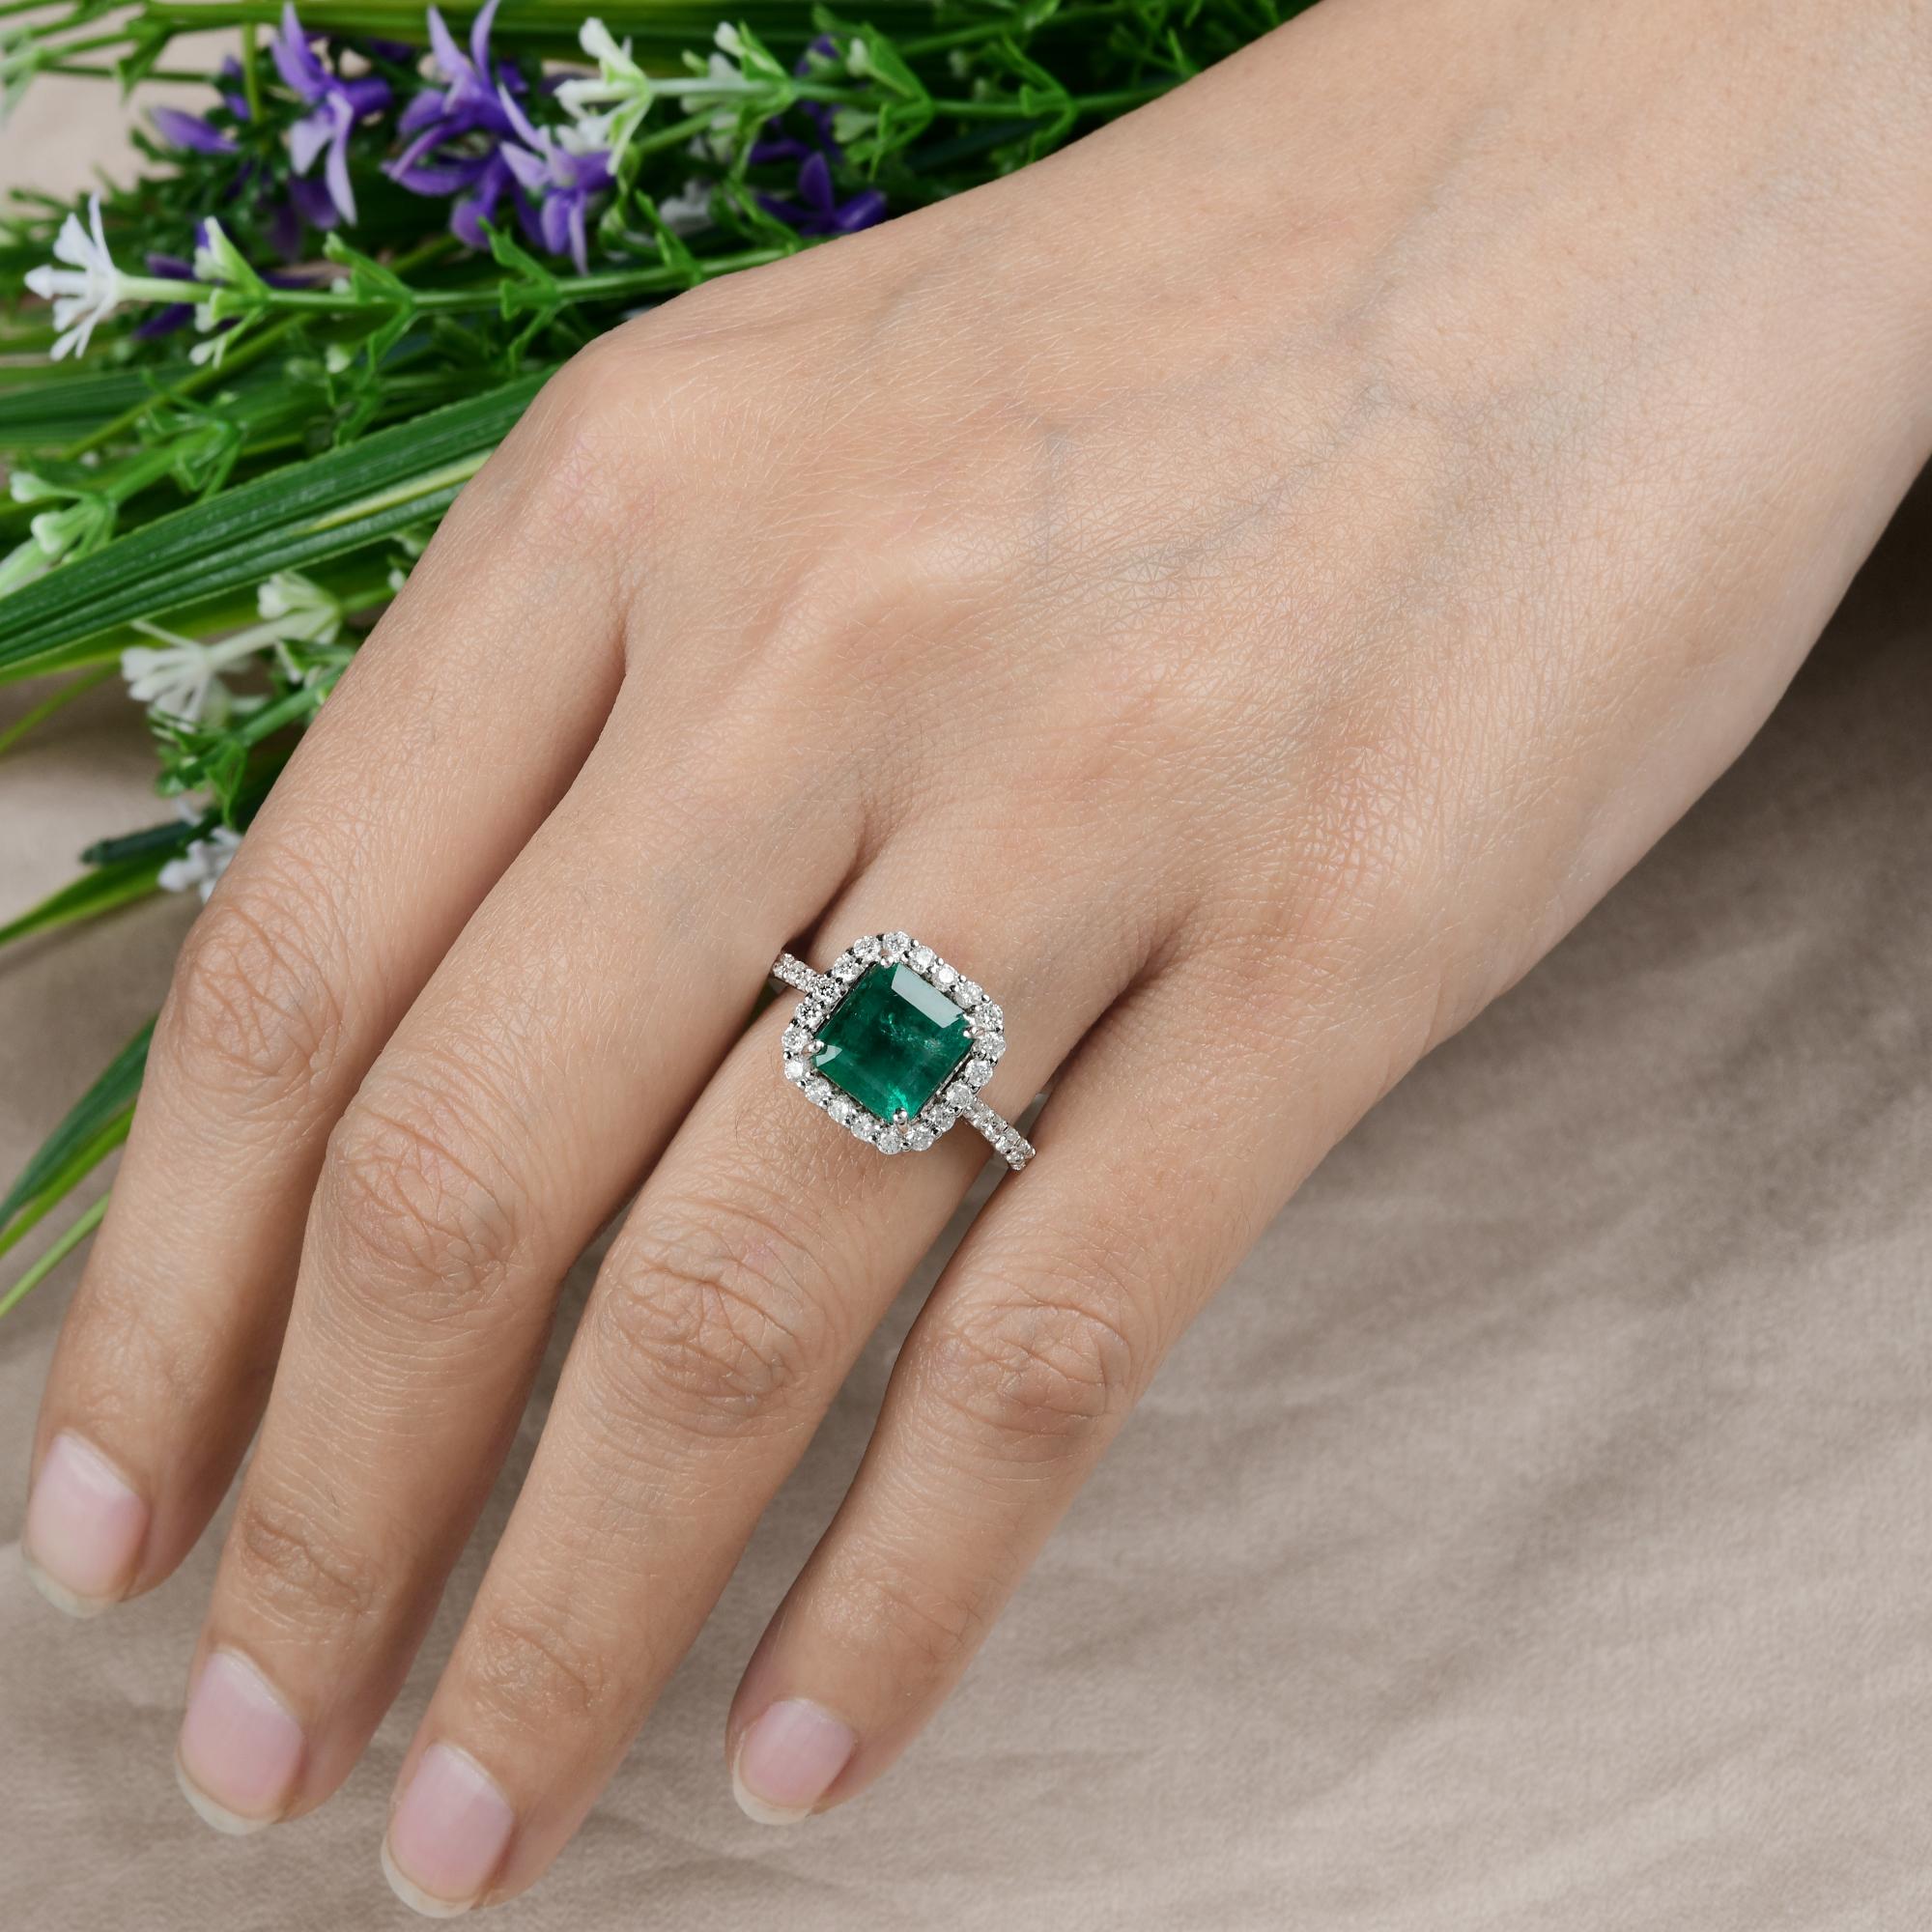 Women's Zambian Emerald Gemstone Cocktail Ring Diamond 18 Kt White Gold Handmade Jewelry For Sale